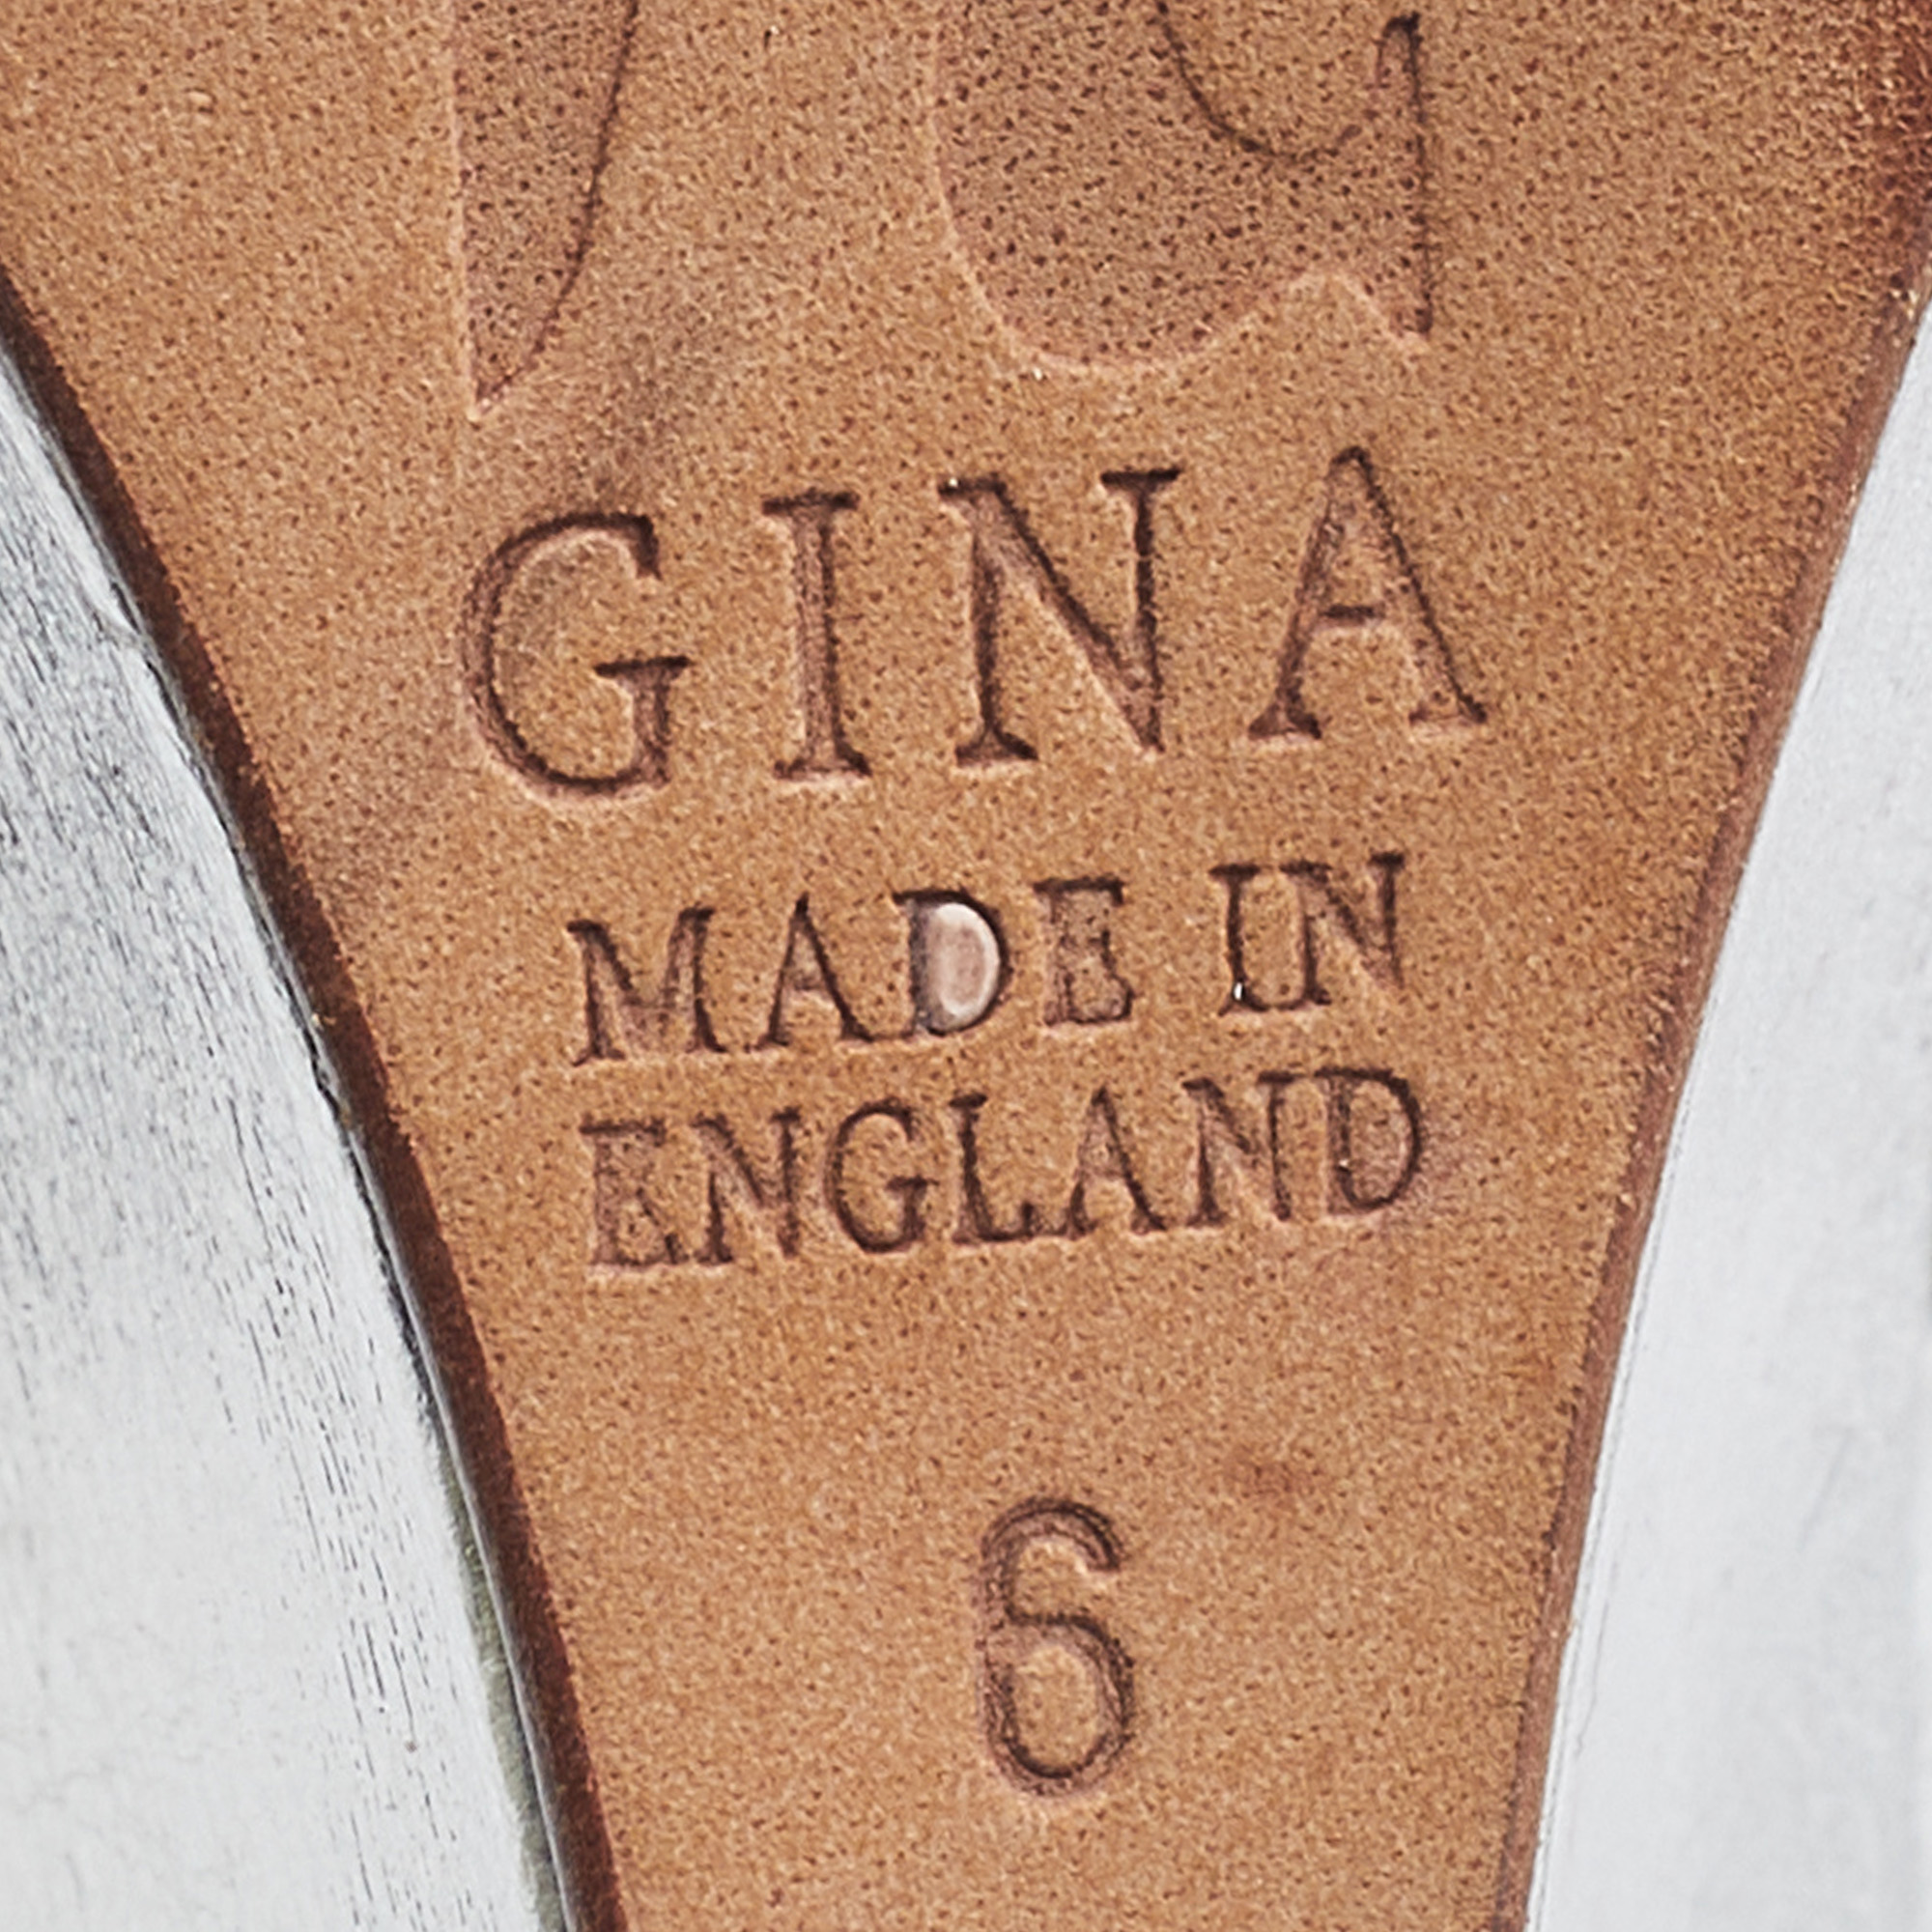 Gina Silver Leather Crystal Embellished Wedge Sandals Size 39